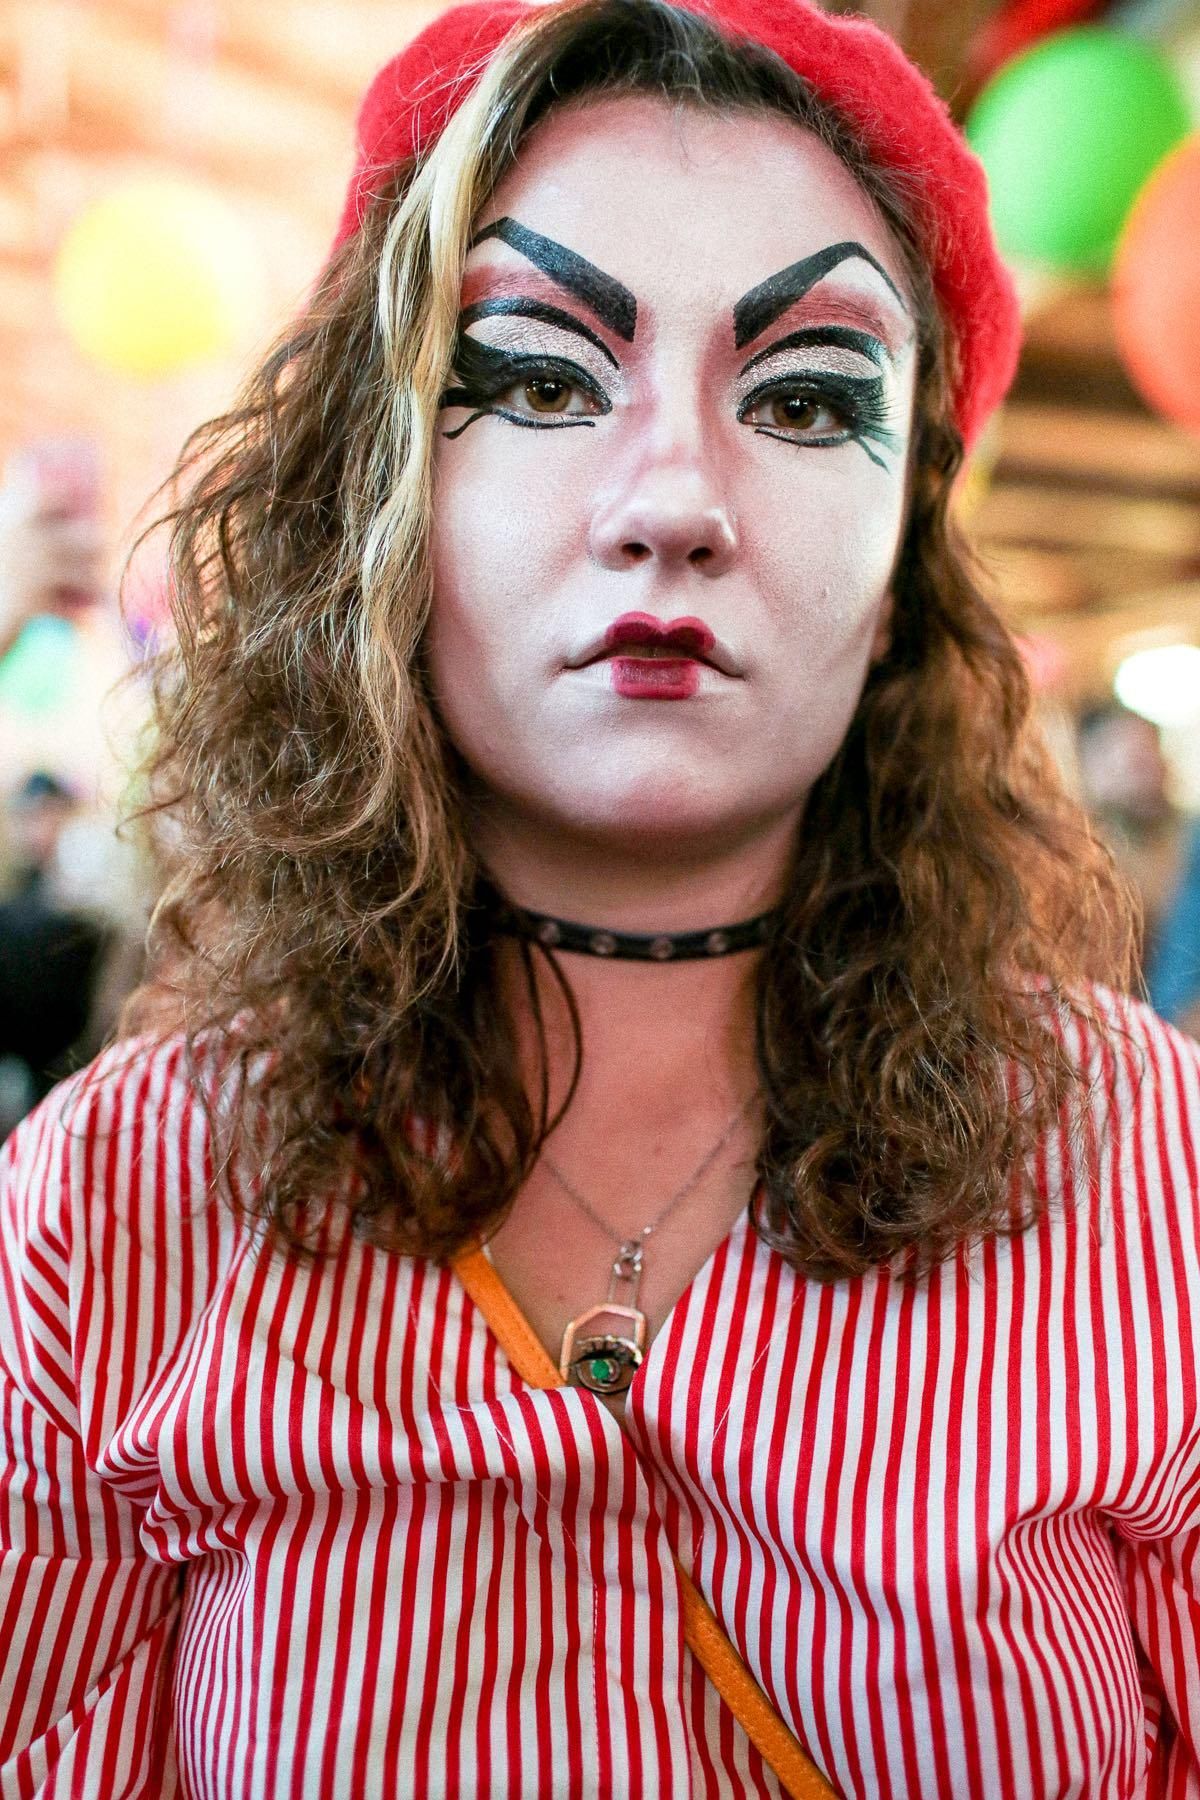 Queens of Bushwig: 100+ Portraits From Brooklyn's Biggest Drag Festival